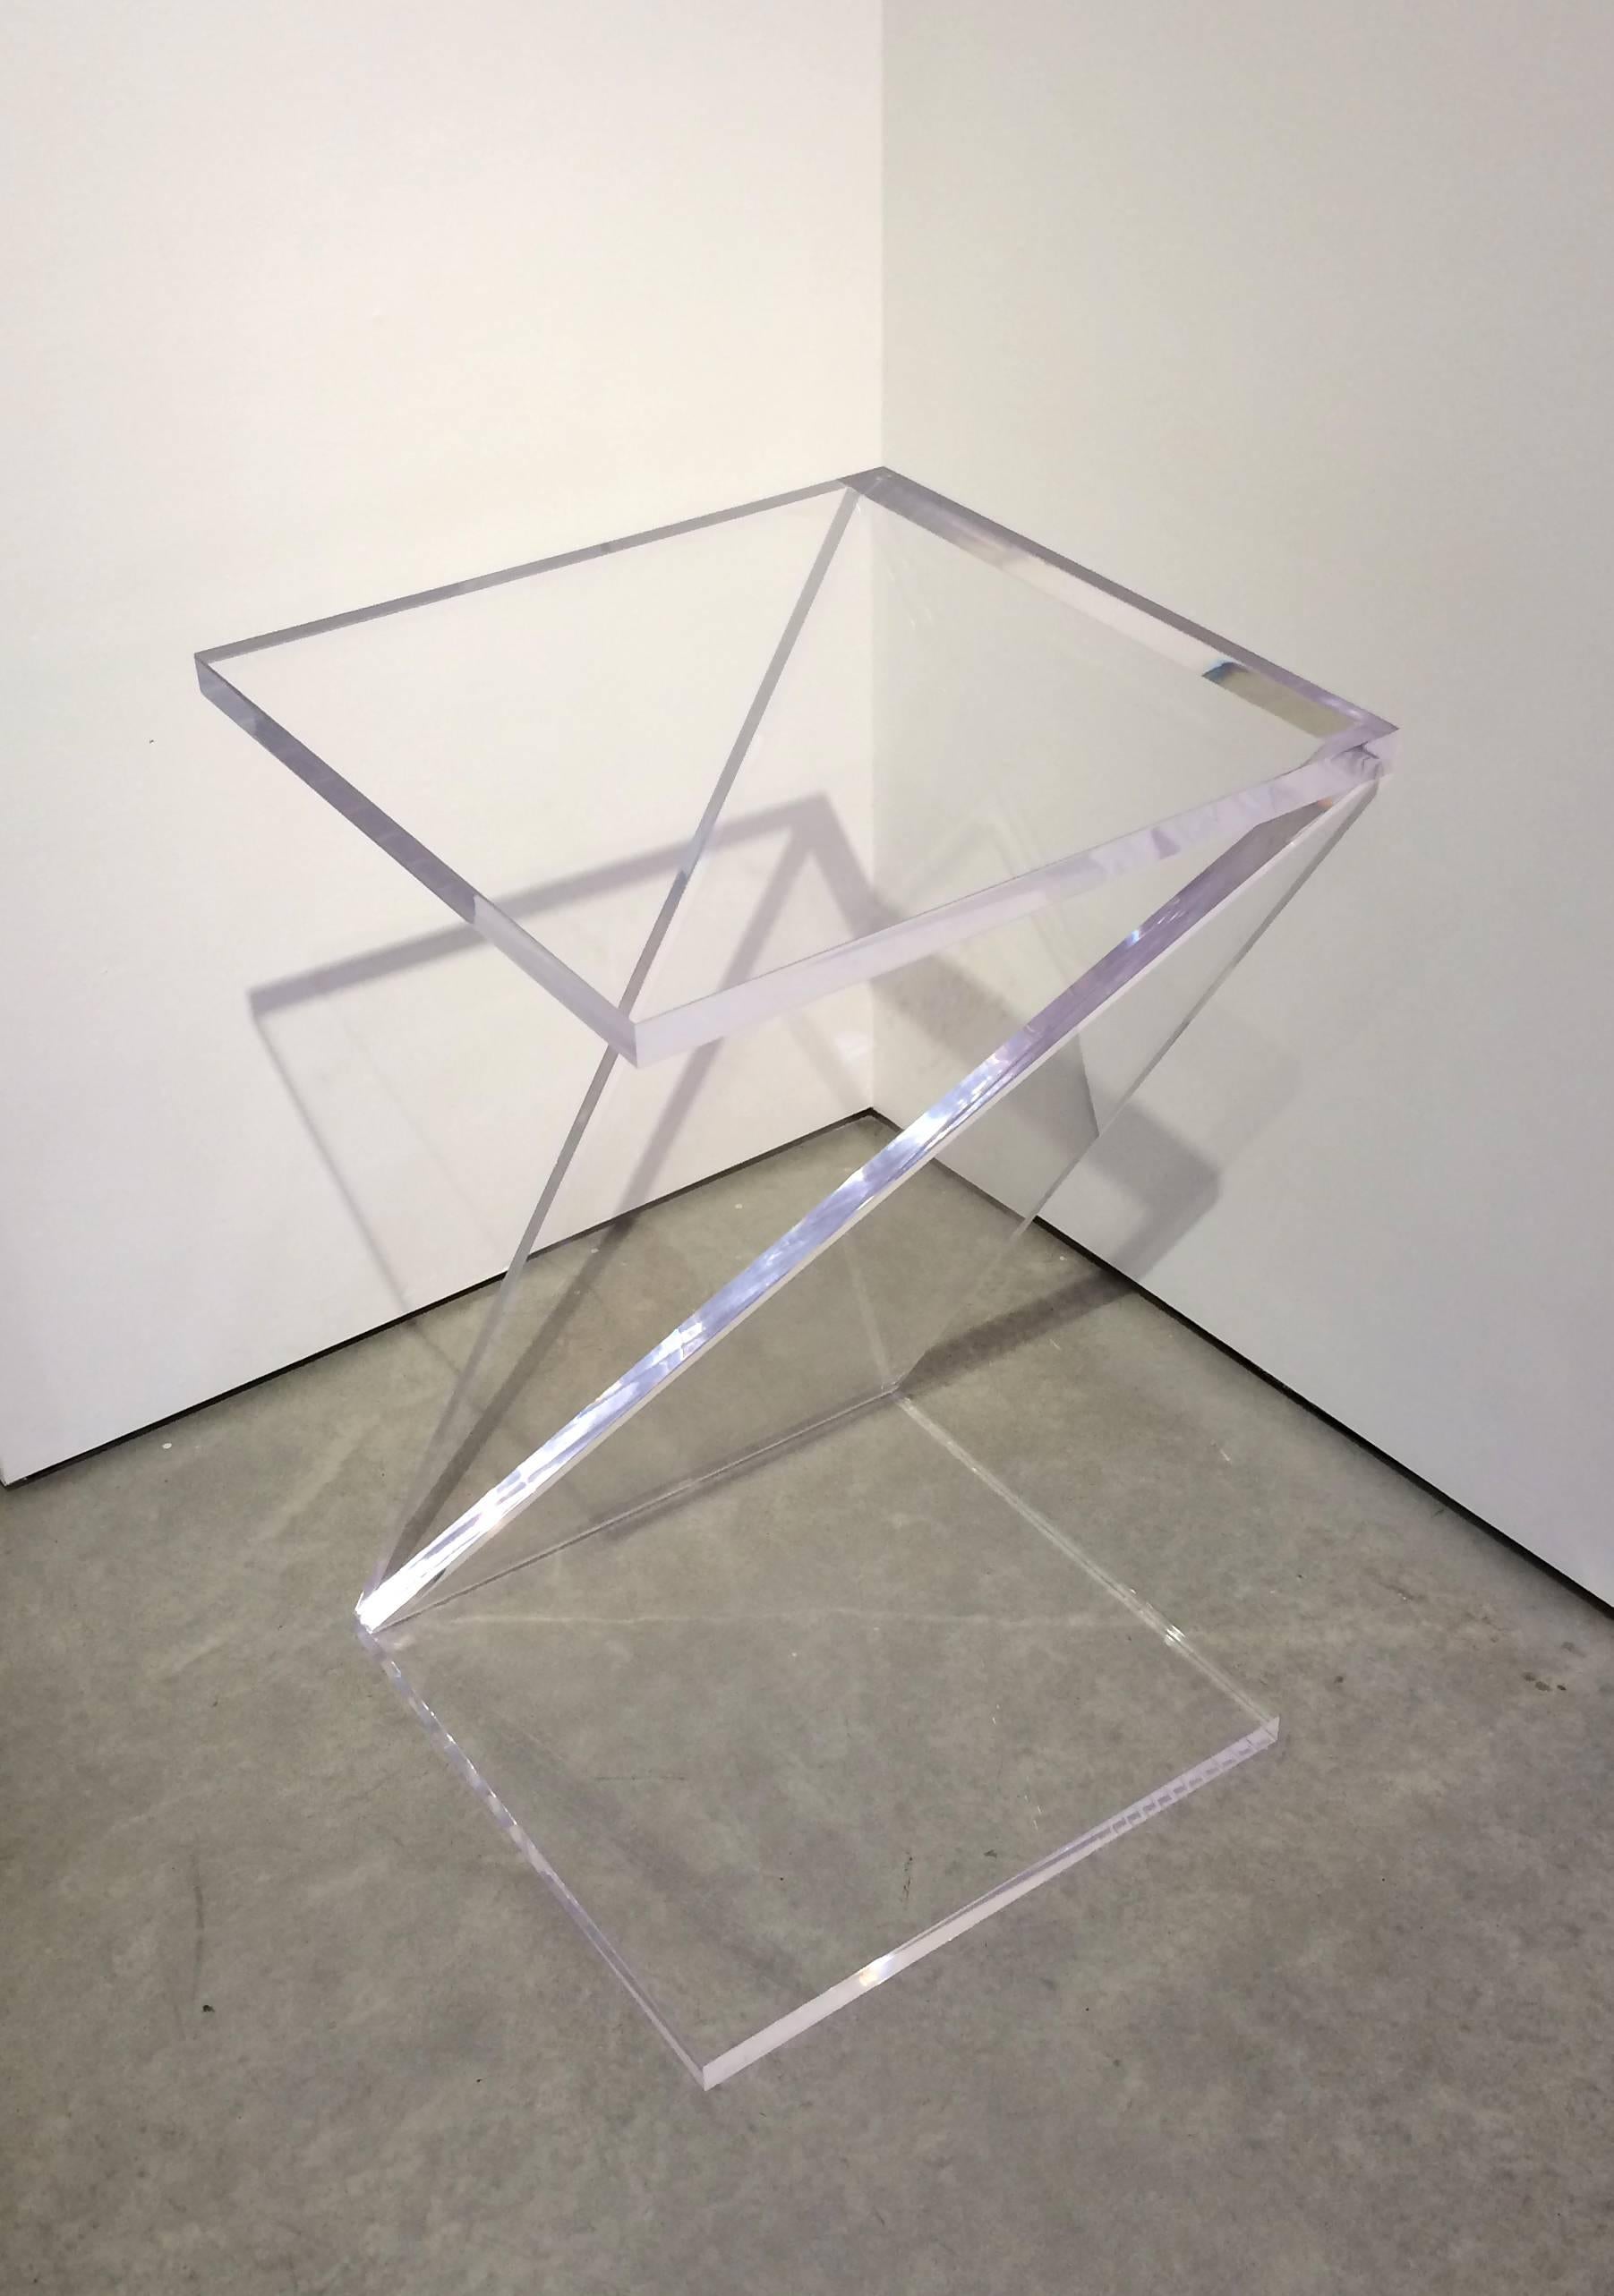 Stephen Chauvin Abstract Sculpture - Edra Series